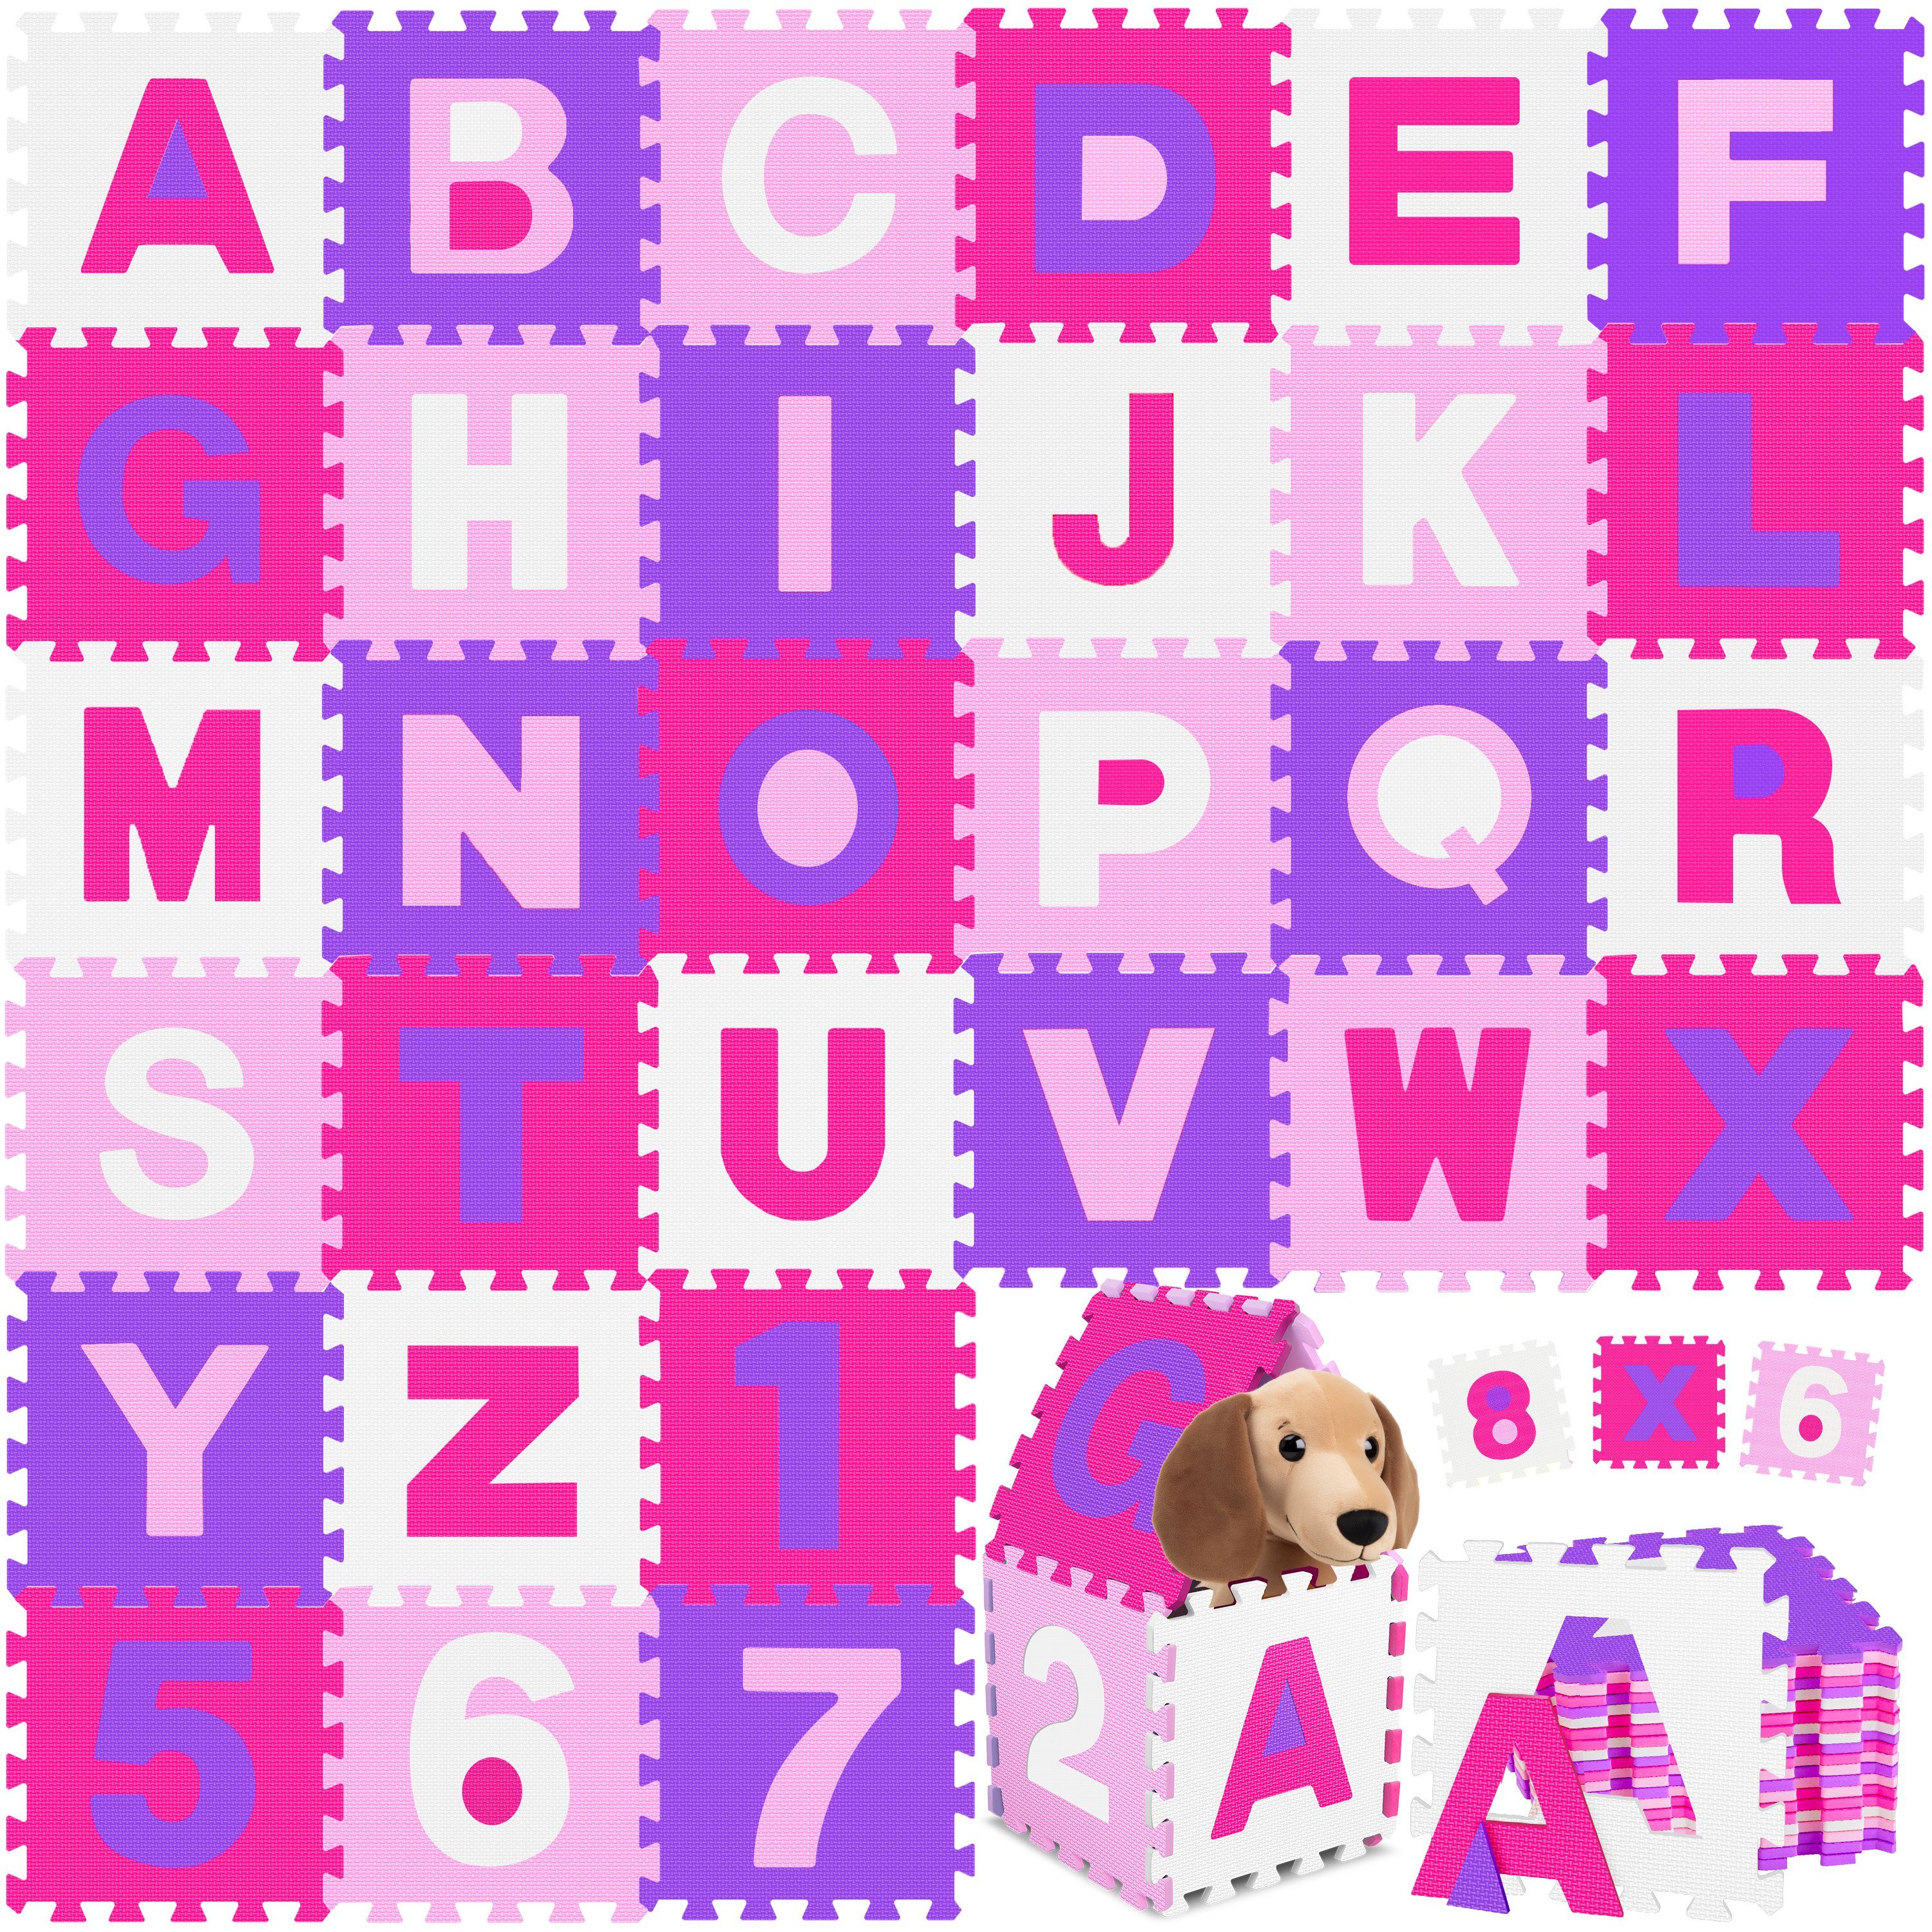 KIDIZ Steckpuzzle, 86 Puzzleteile, 86 teilige Puzzlematte Kinder Spielteppich Spielmatte rosa